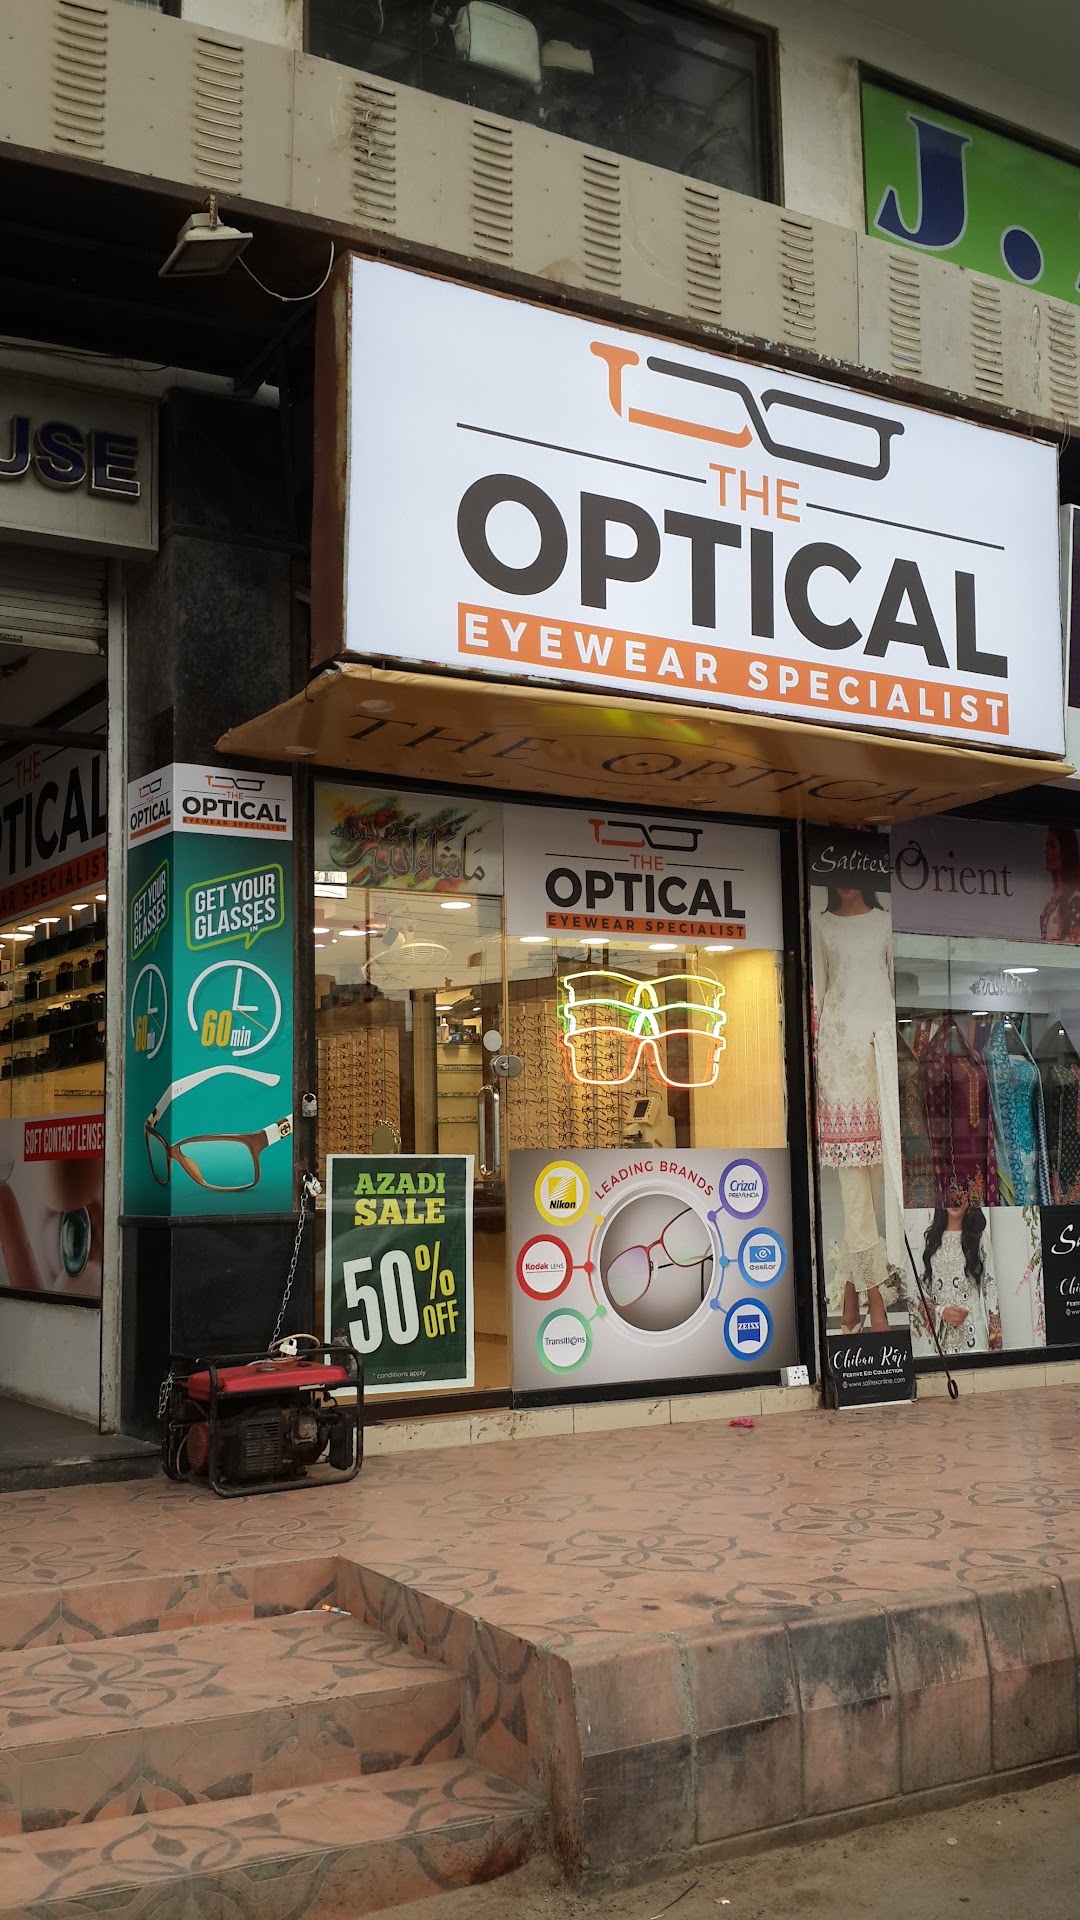 The Optical